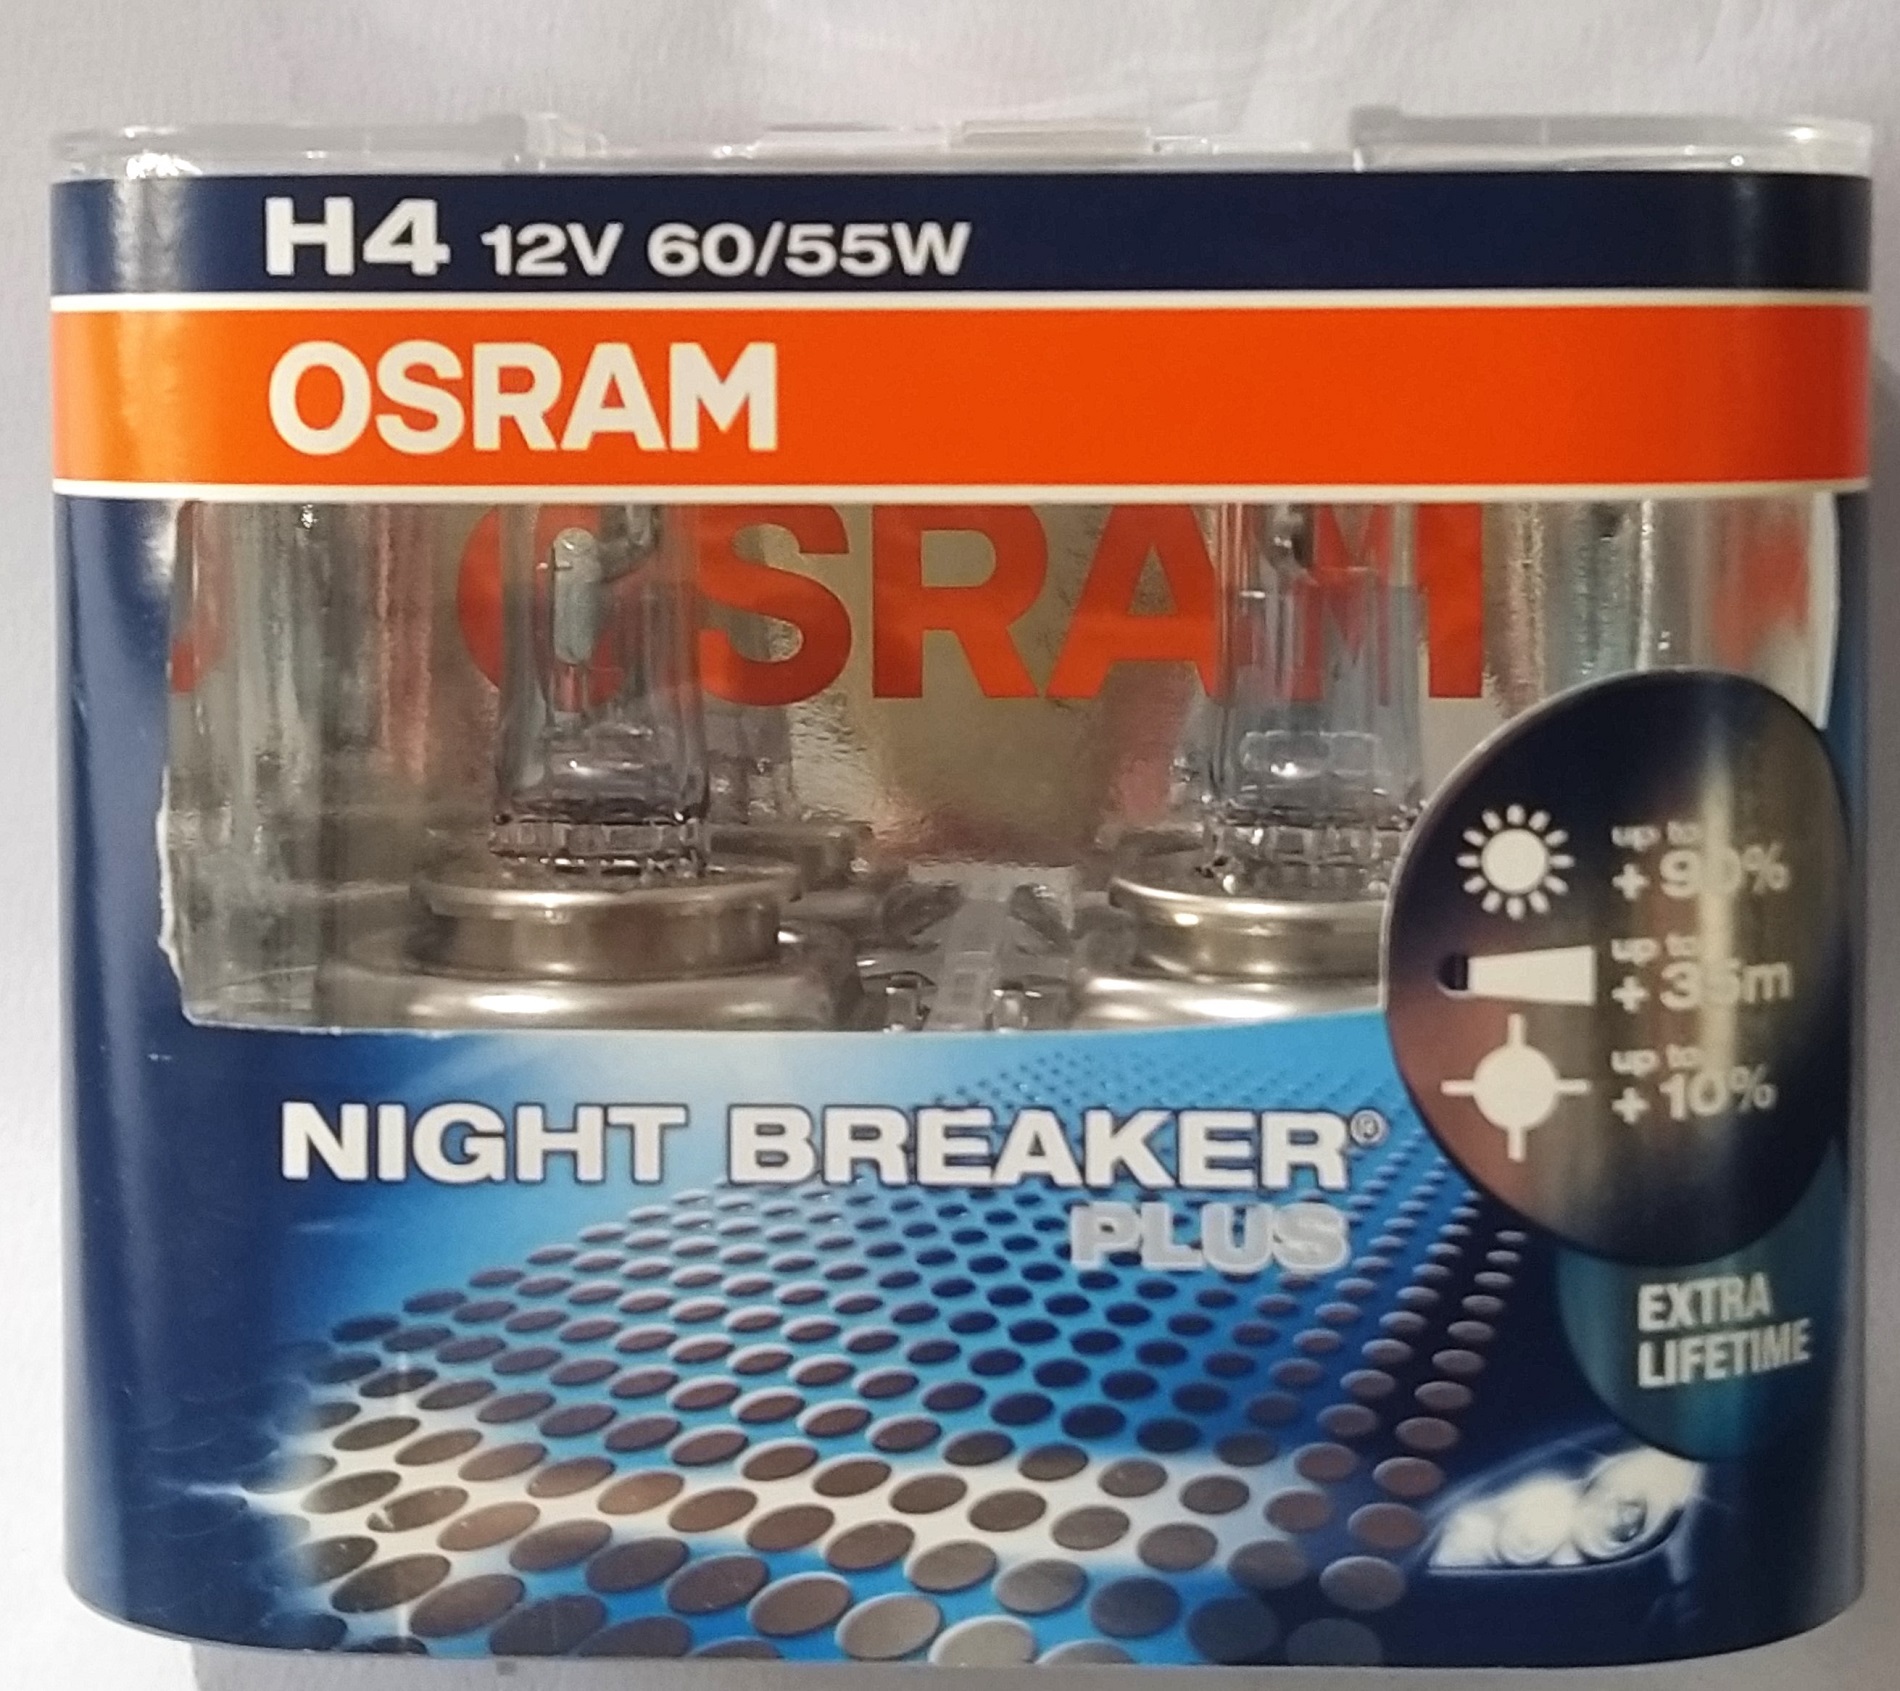 Осрам Найт брекер плюс h4. Осрам Найт брекер. Osram Night Breaker Plus. Лампа 12vx60/55w h4 Osram Night Breaker Laser шт.